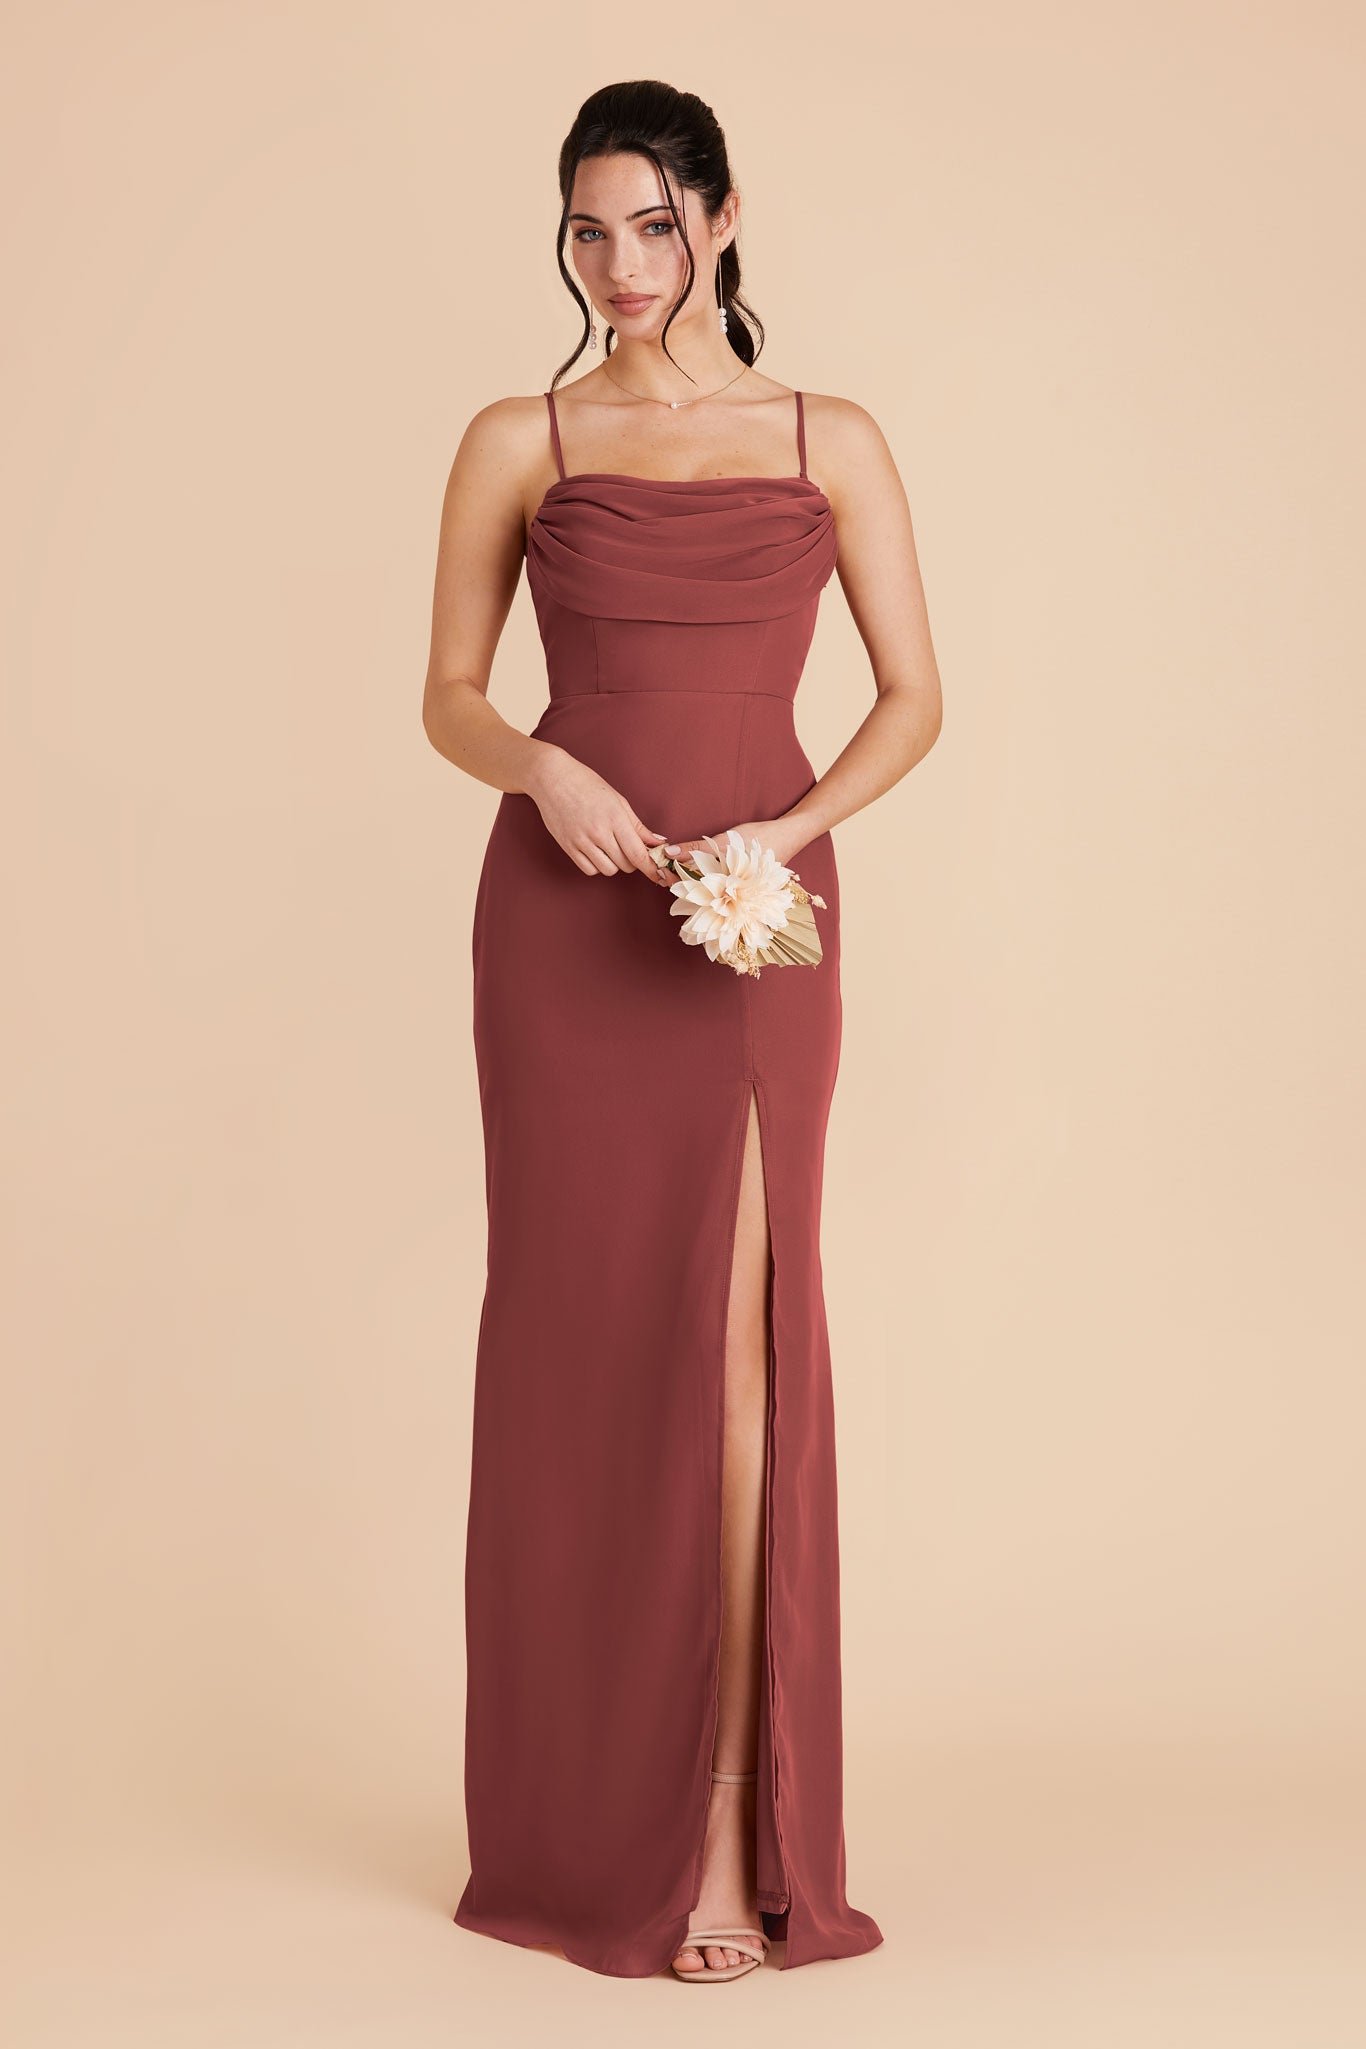 Spence Convertible Chiffon Bridesmaid Dress in English Rose